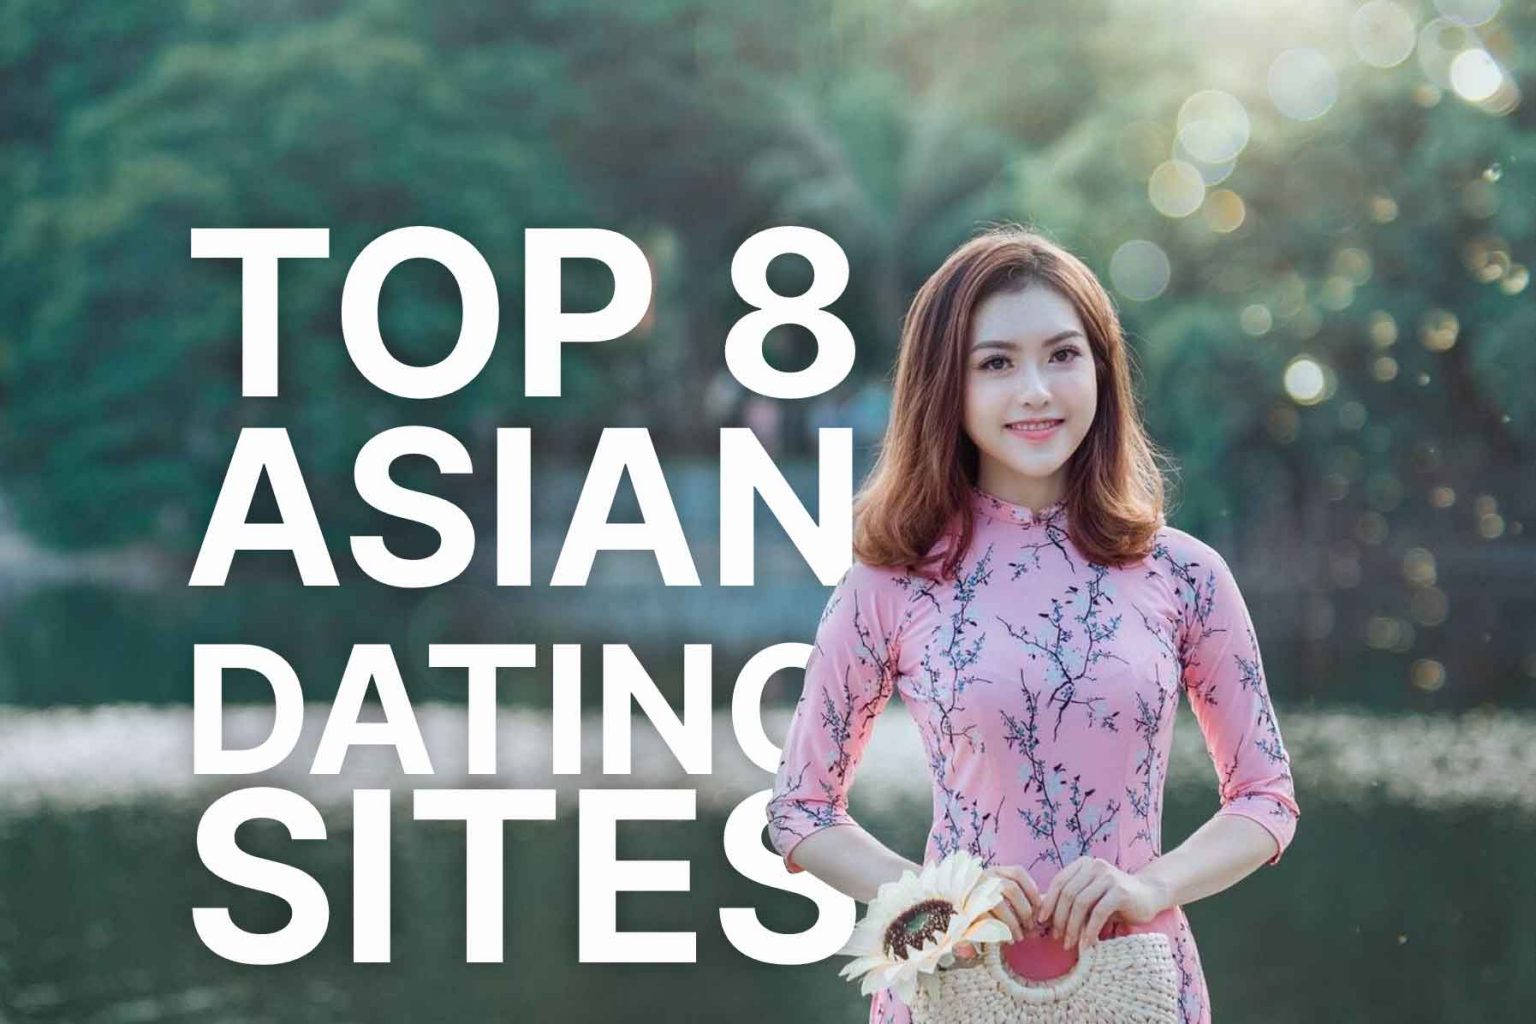 Dating sites asian Gresham
